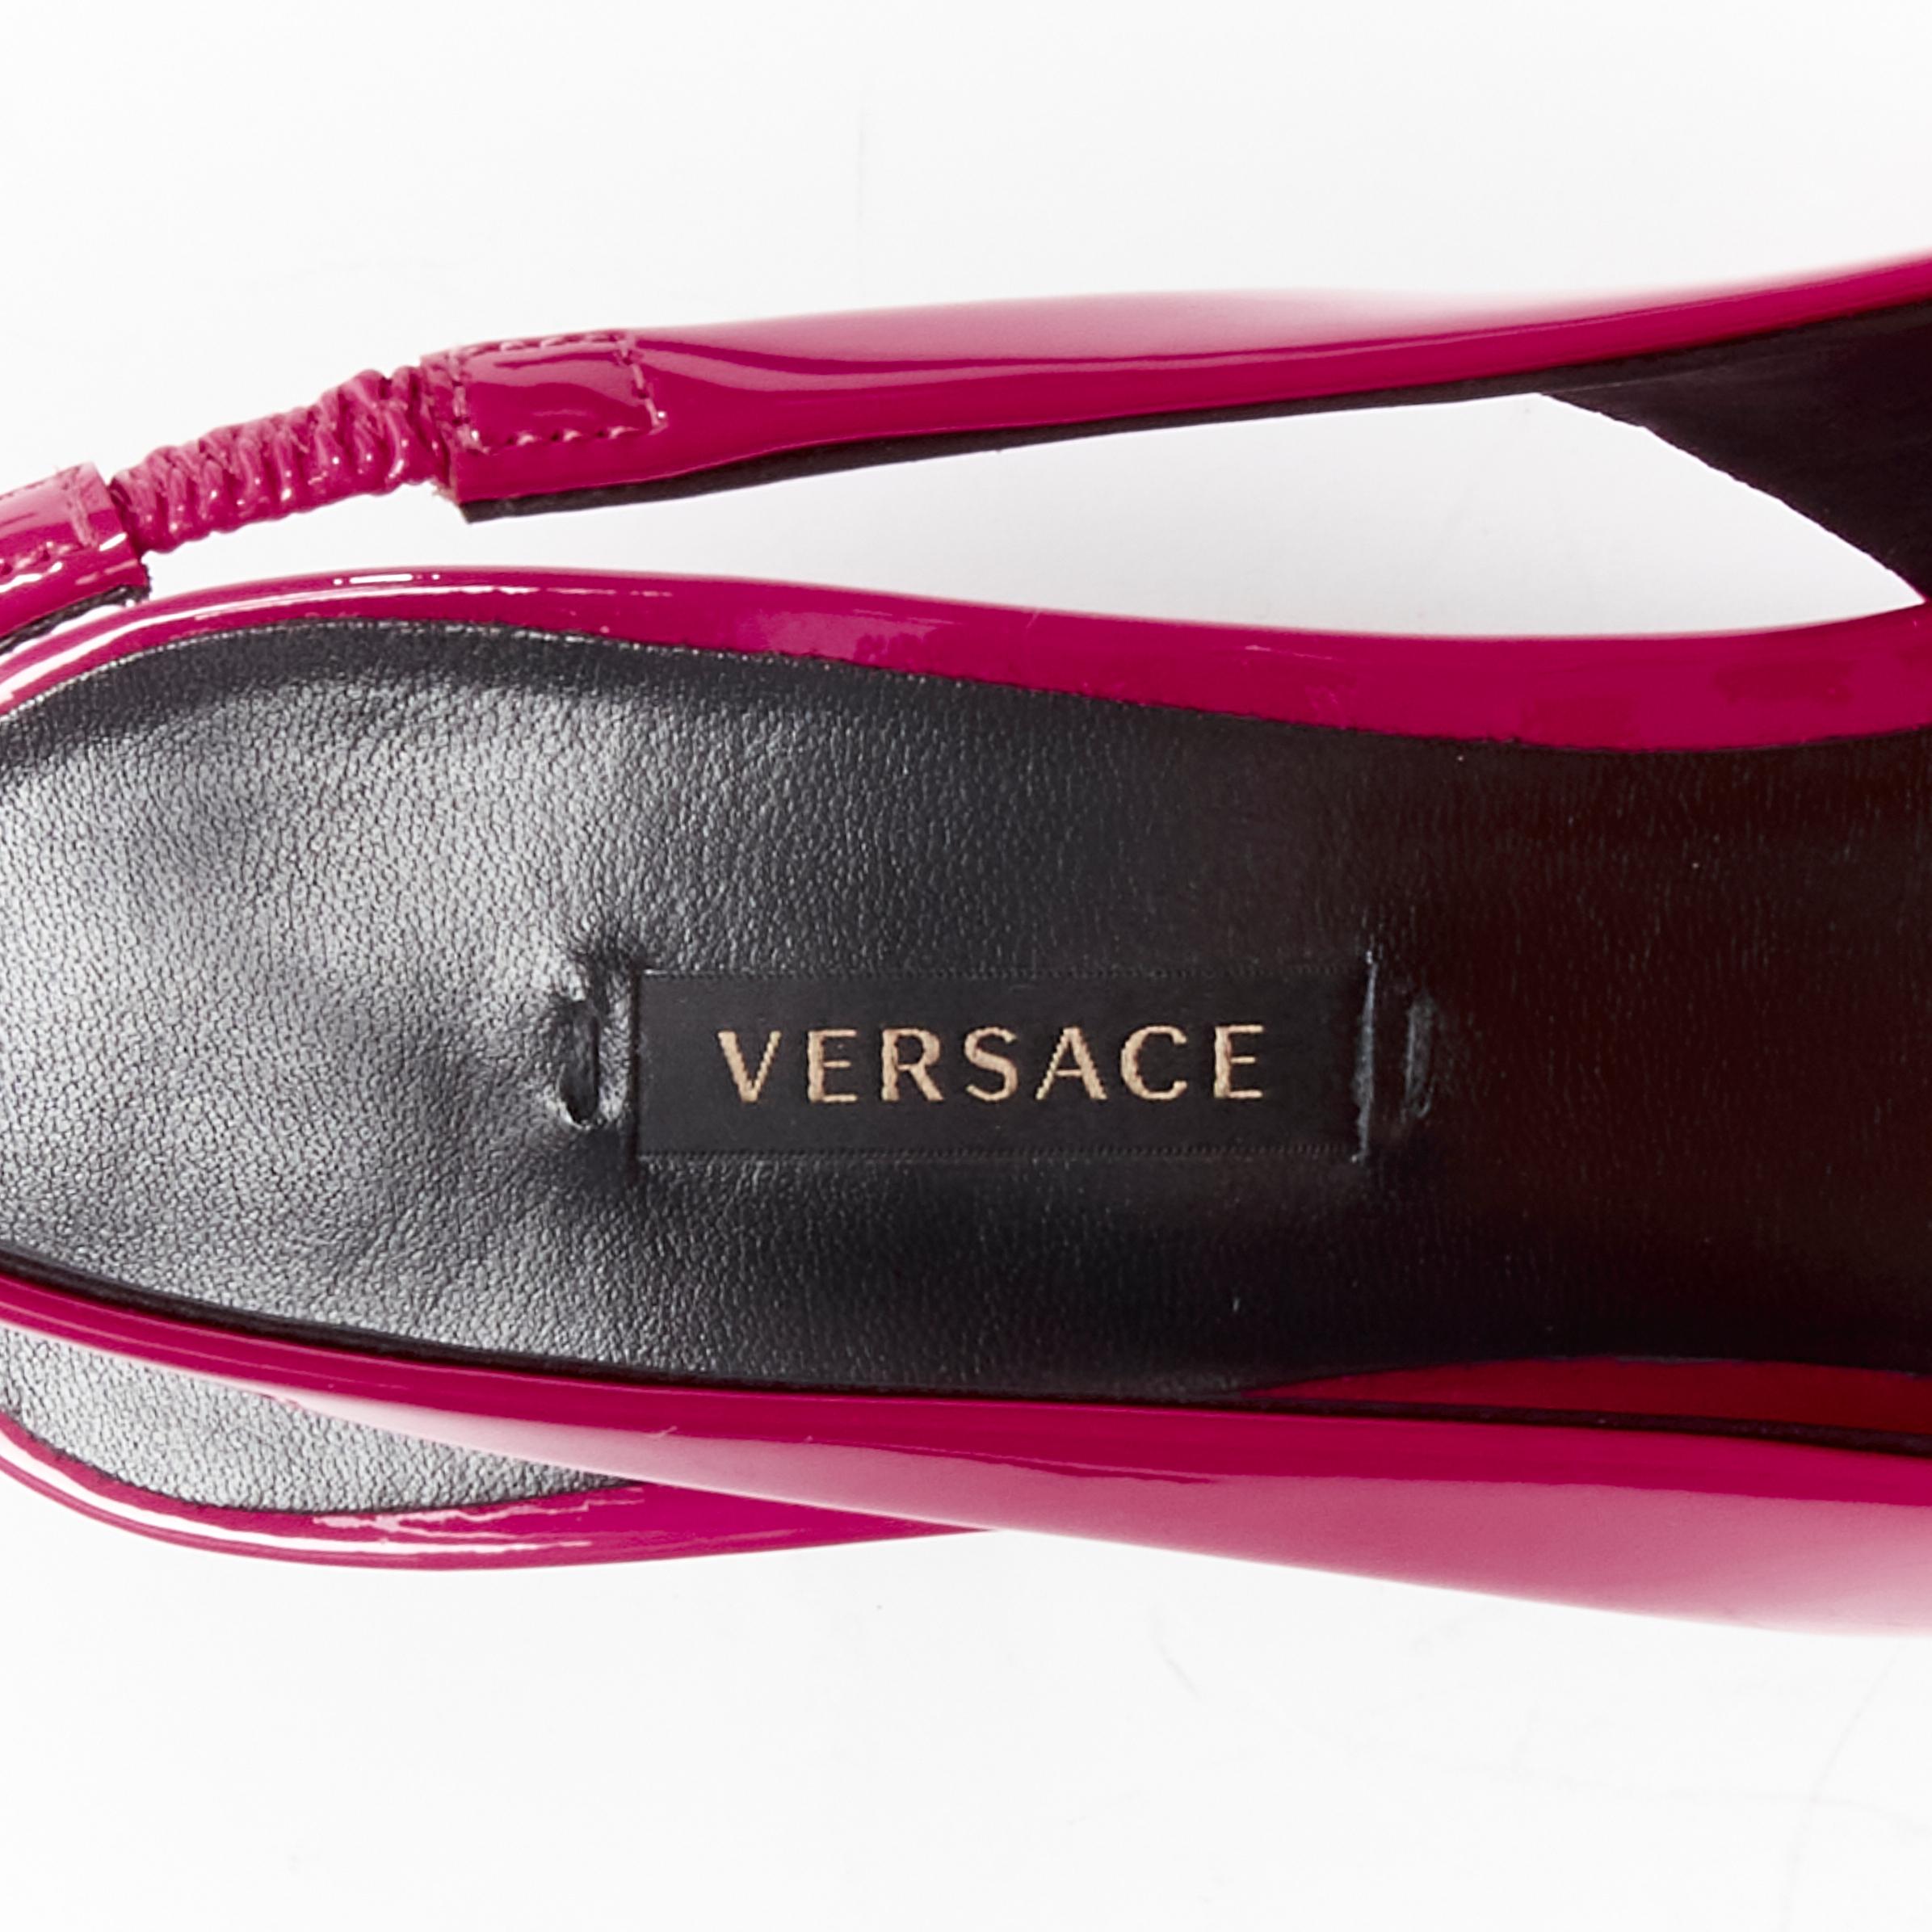 new VERSACE Palazzo Medusa fuscia pink sling kitteh heel pointed toe pump EU36 For Sale 4